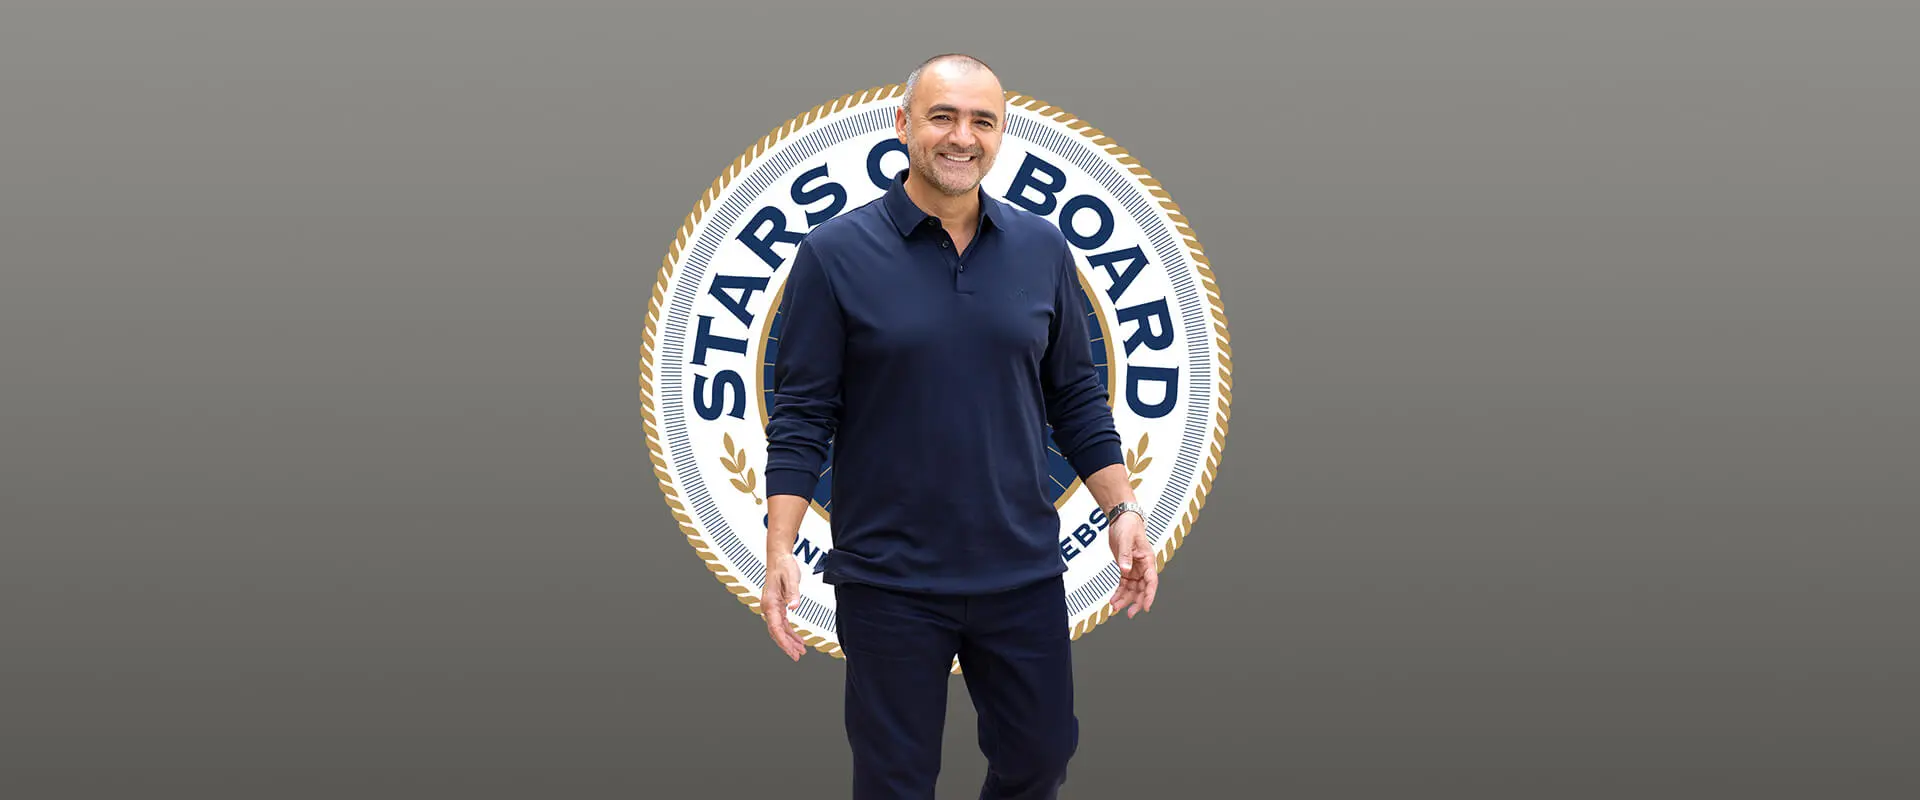 Stars on Board - Banner - H (1)